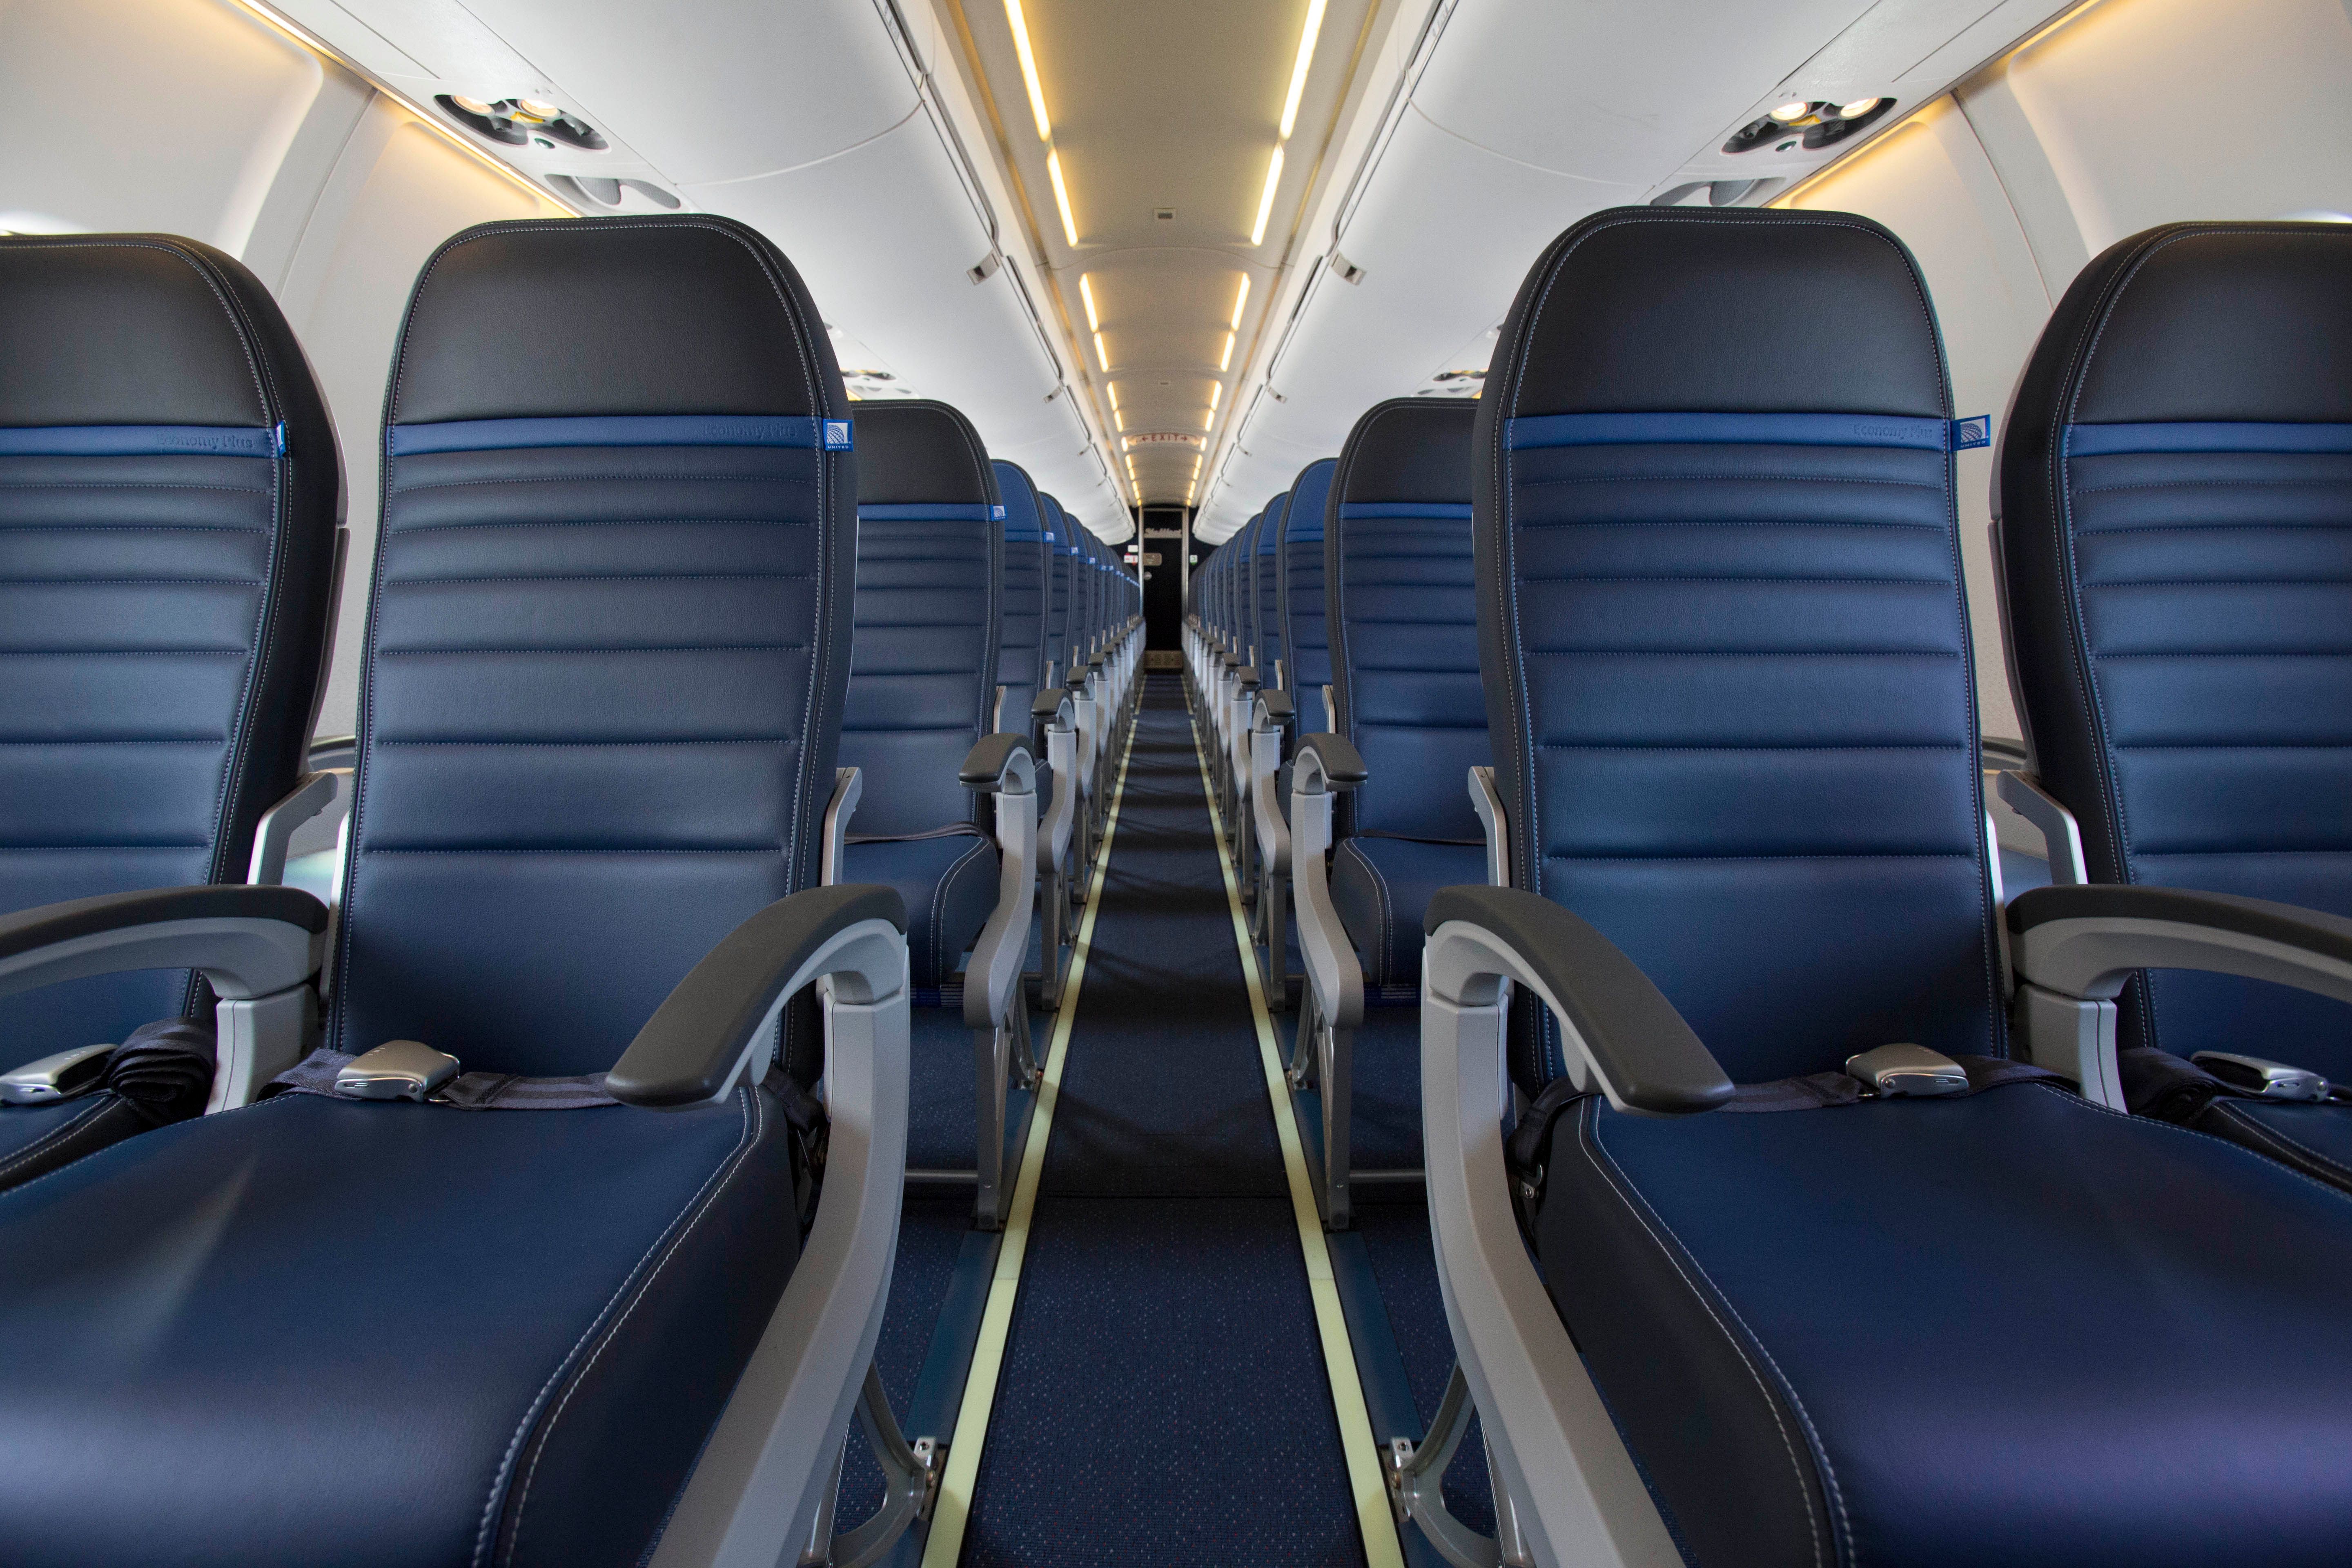 Economy Plus cabin on United CRJ700